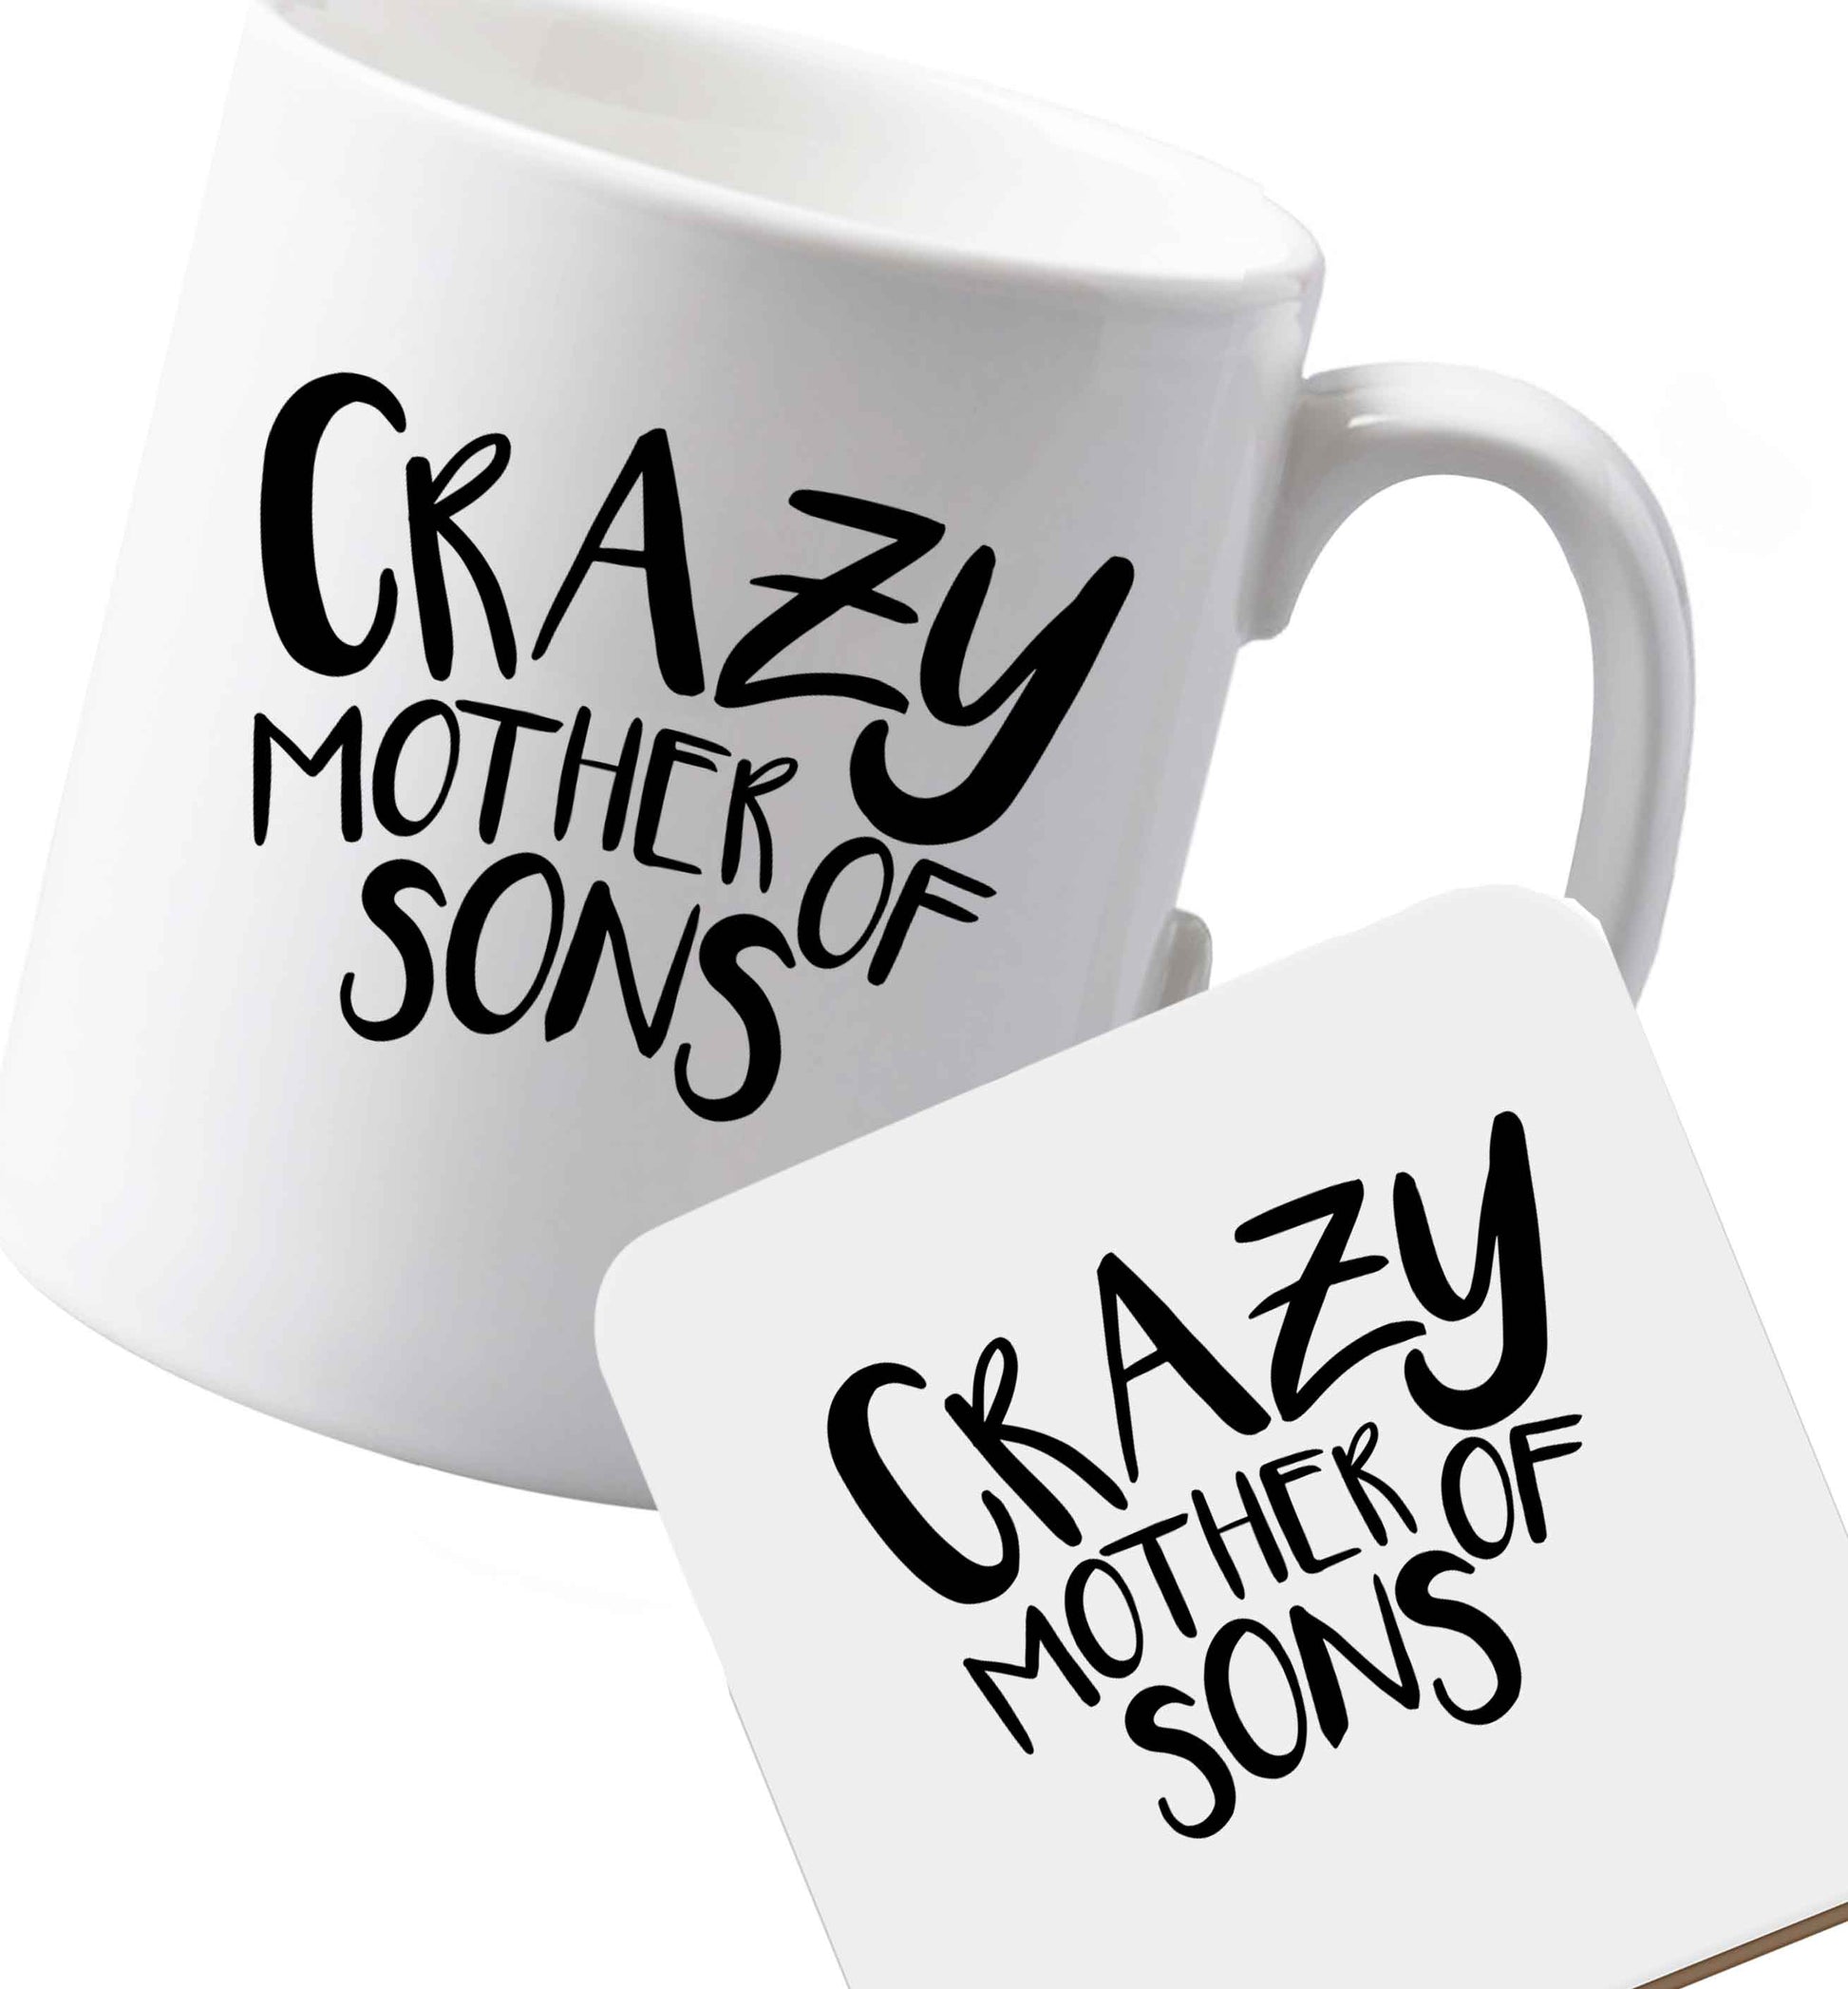 10 oz Ceramic mug and coaster Crazy mother of sons both sides